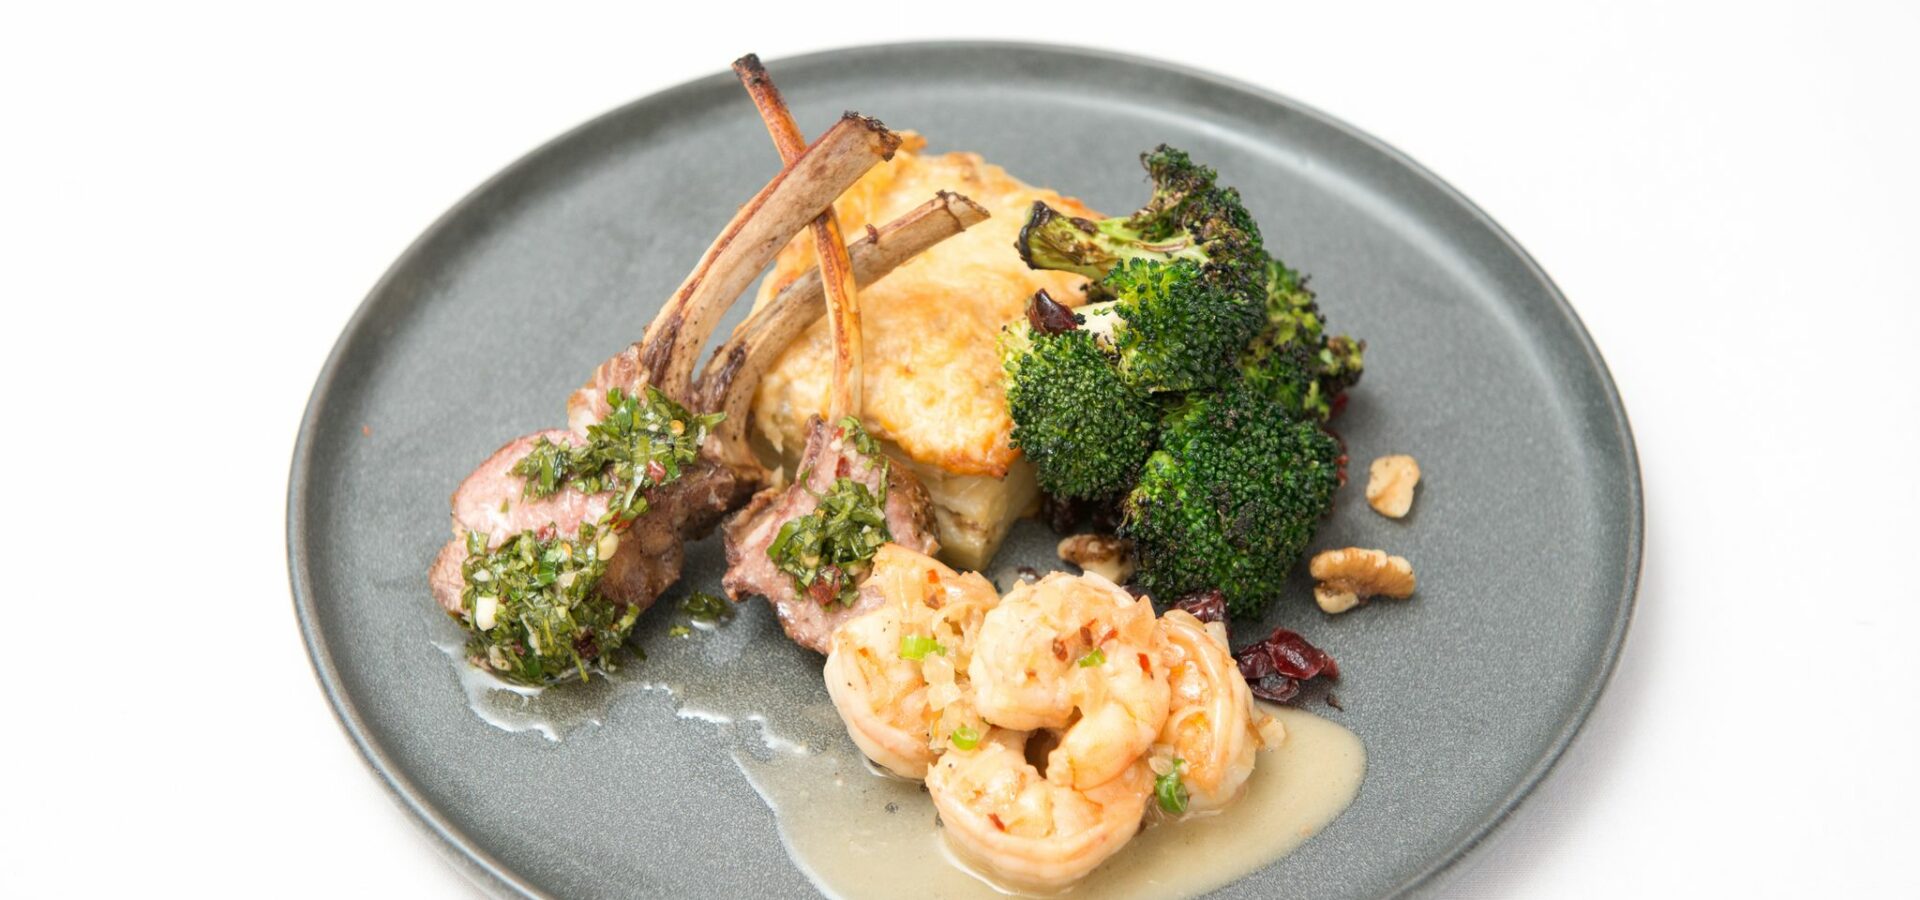 lamb chops, shrimp and broccoli on gray plate